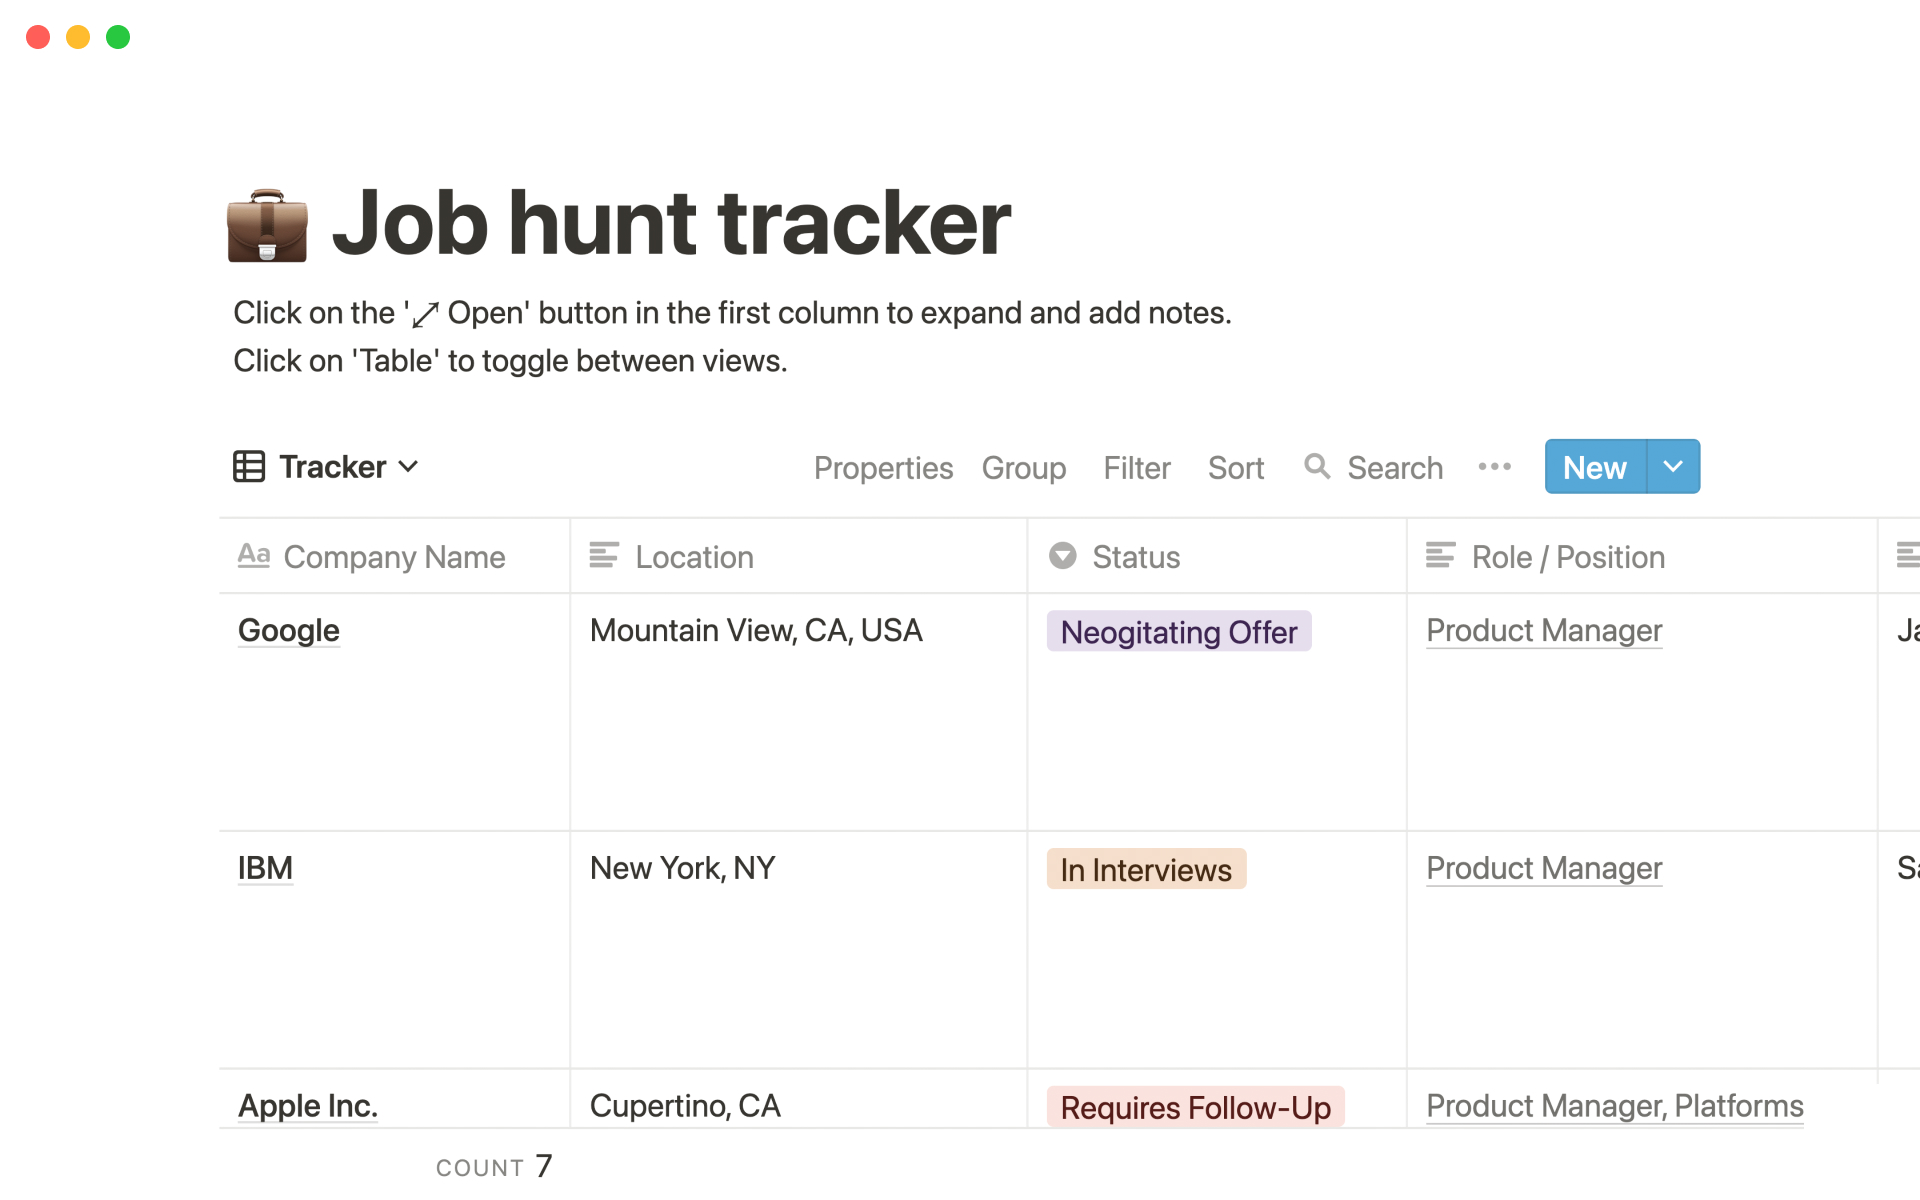 The desktop image for the Job hunt tracker template